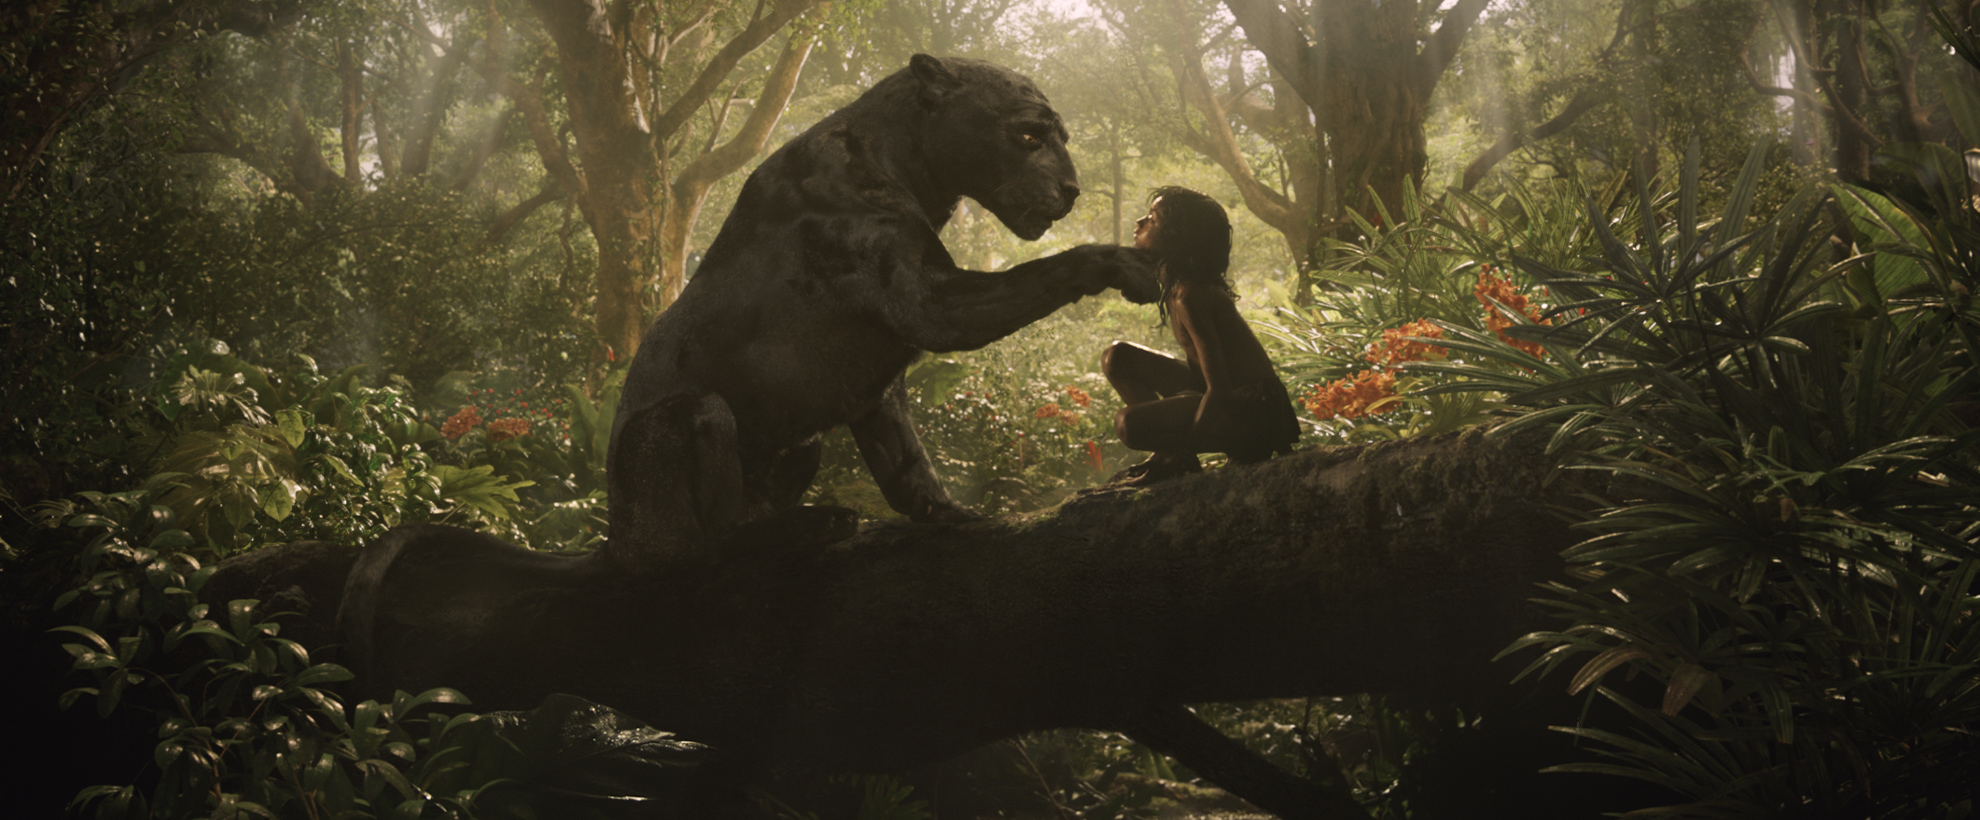 Mowgli and Bagheera the Jaguar sit on a log in the jungle